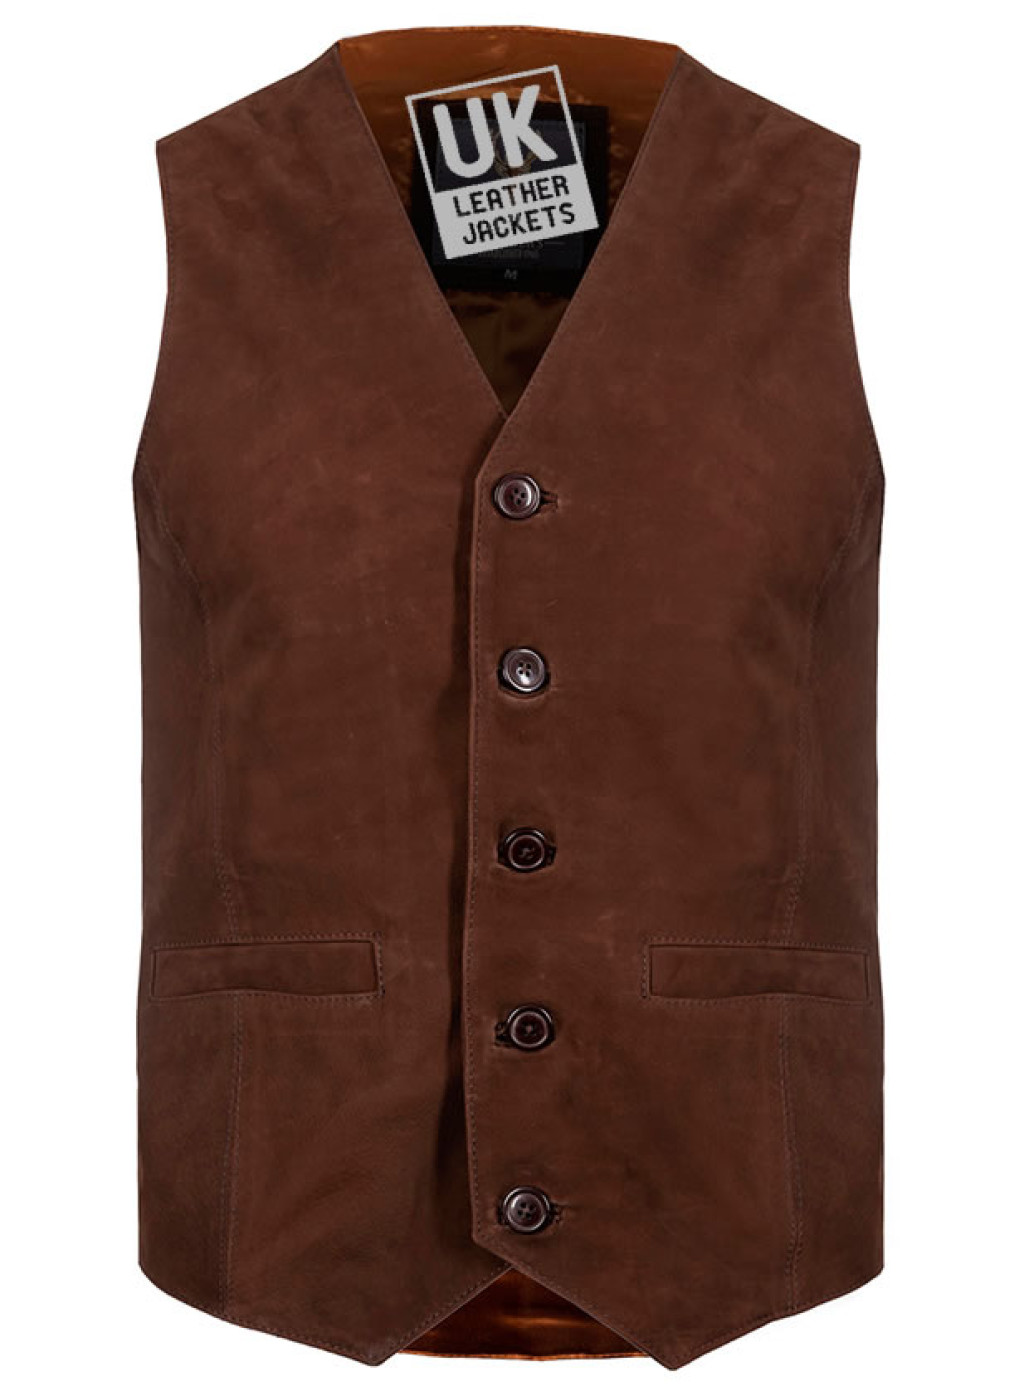 Mens Leather Waistcoats and Gilets | UK Leather Jackets